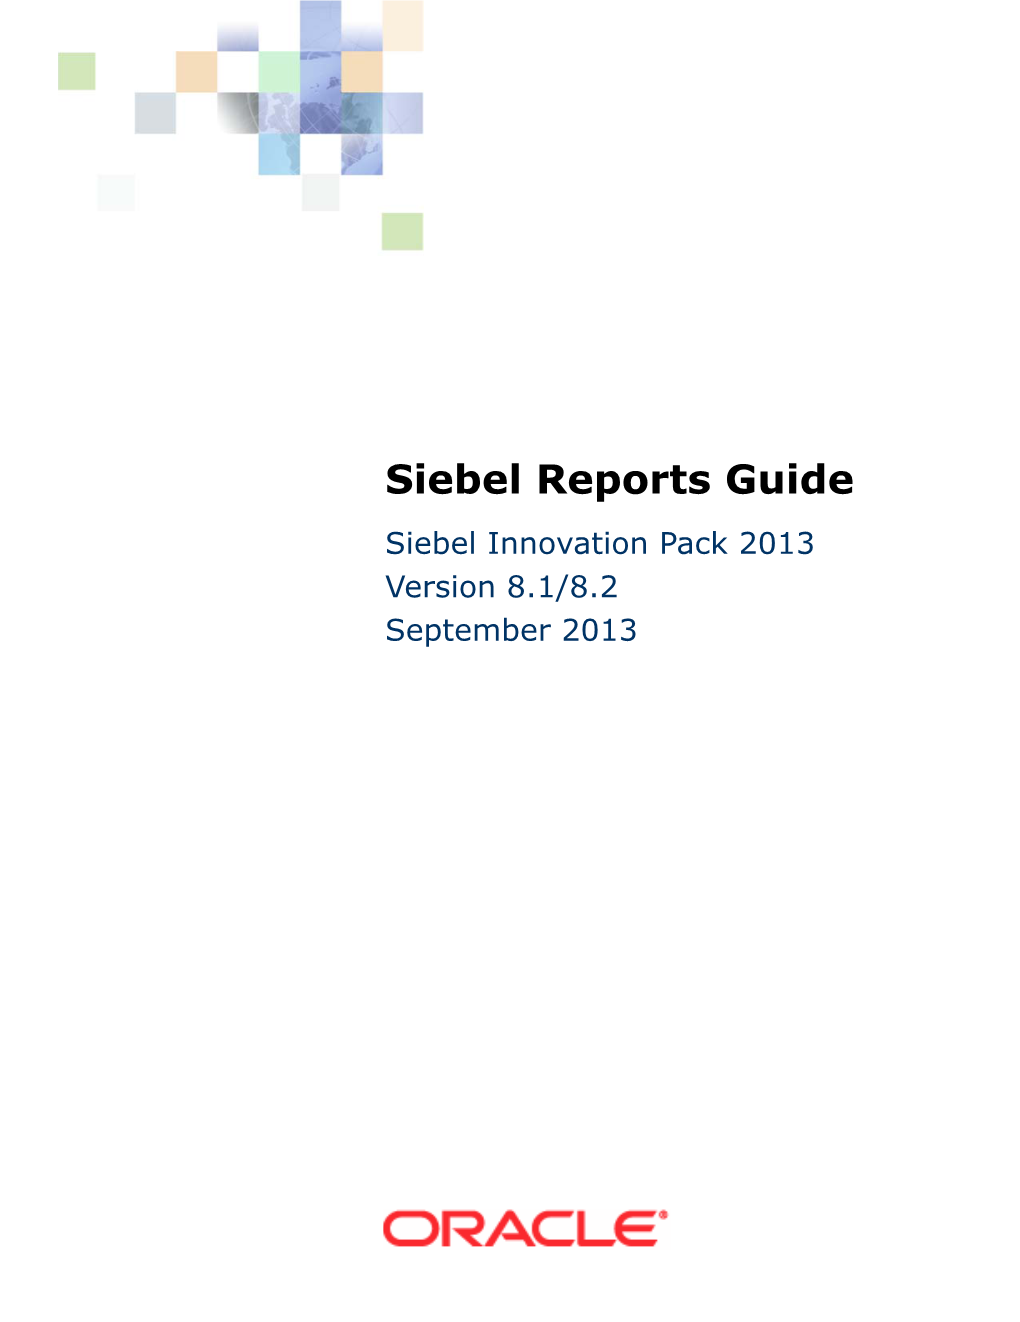 Siebel Reports Guide Siebel Innovation Pack 2013 Version 8.1/8.2 September 2013